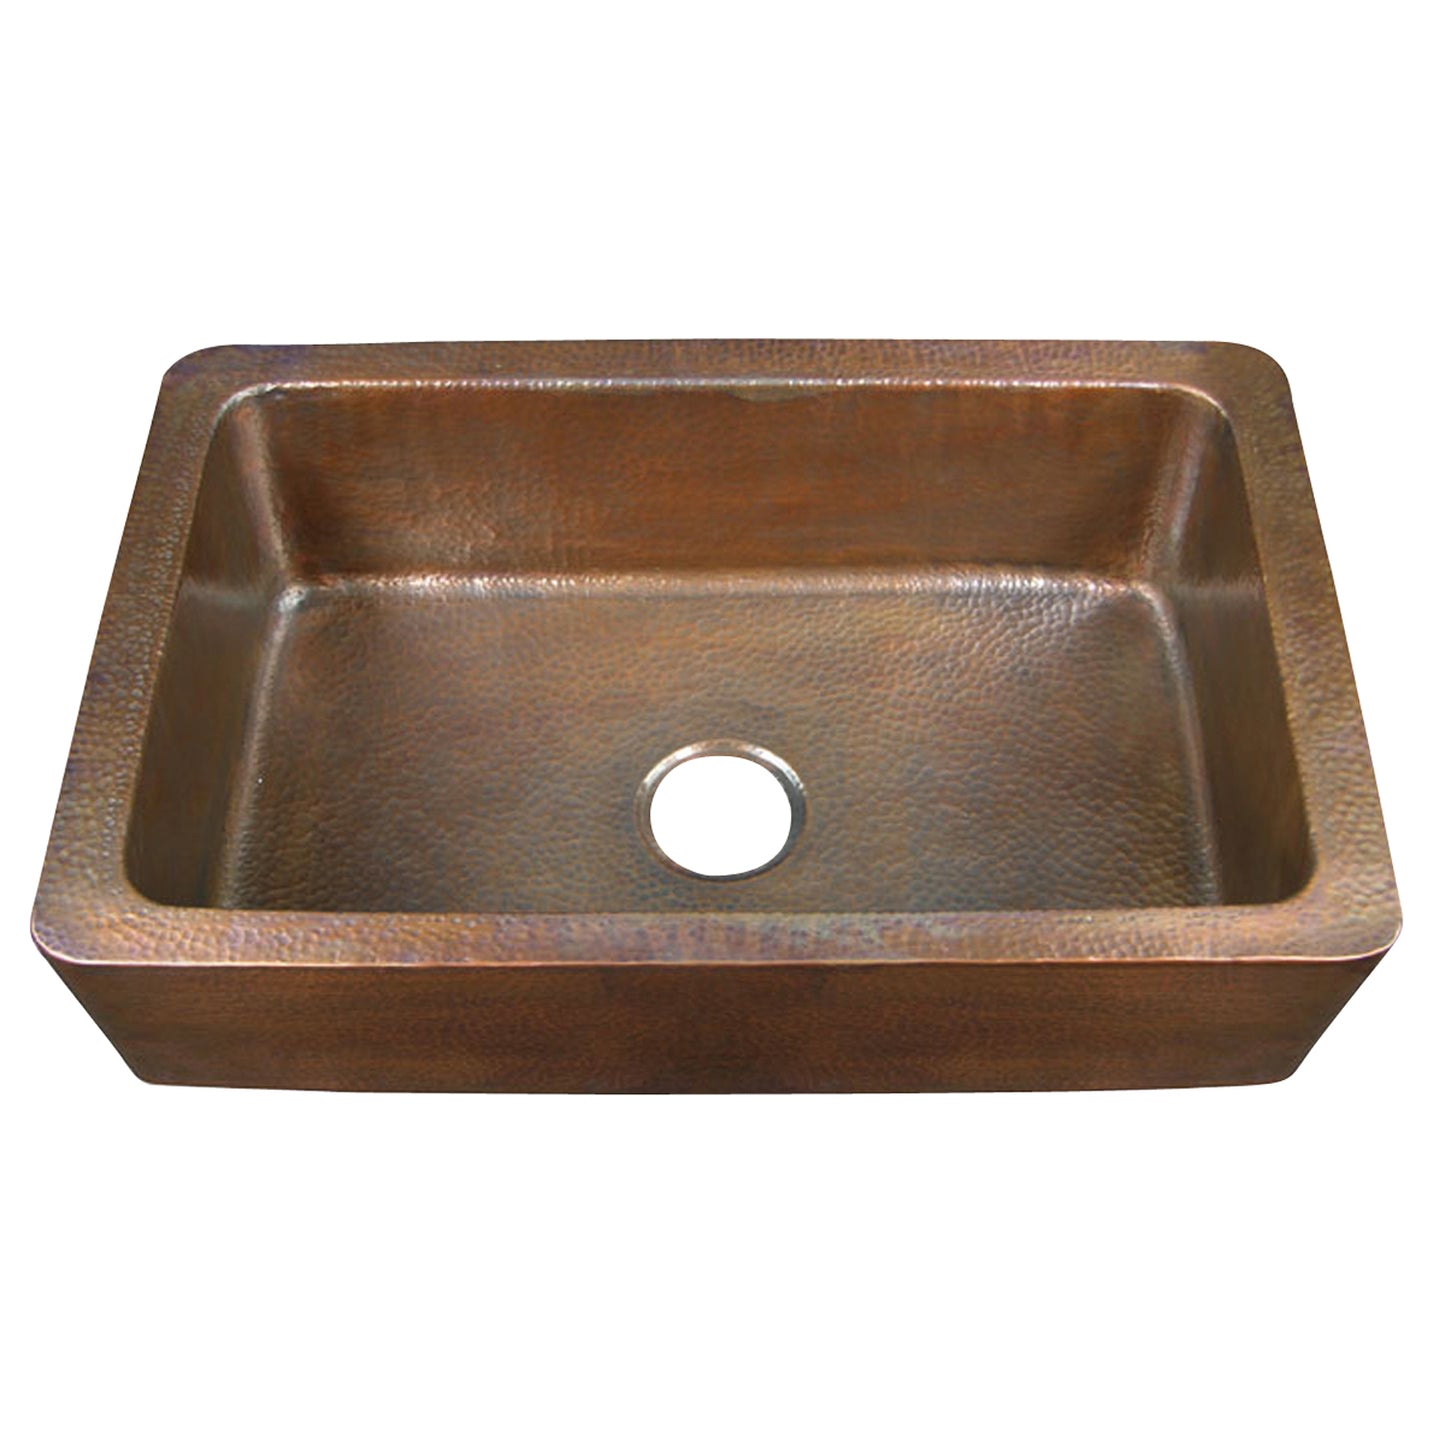 Delta 32" Single Bowl Apron Front Apron Kitchen Sink Hammered Copper